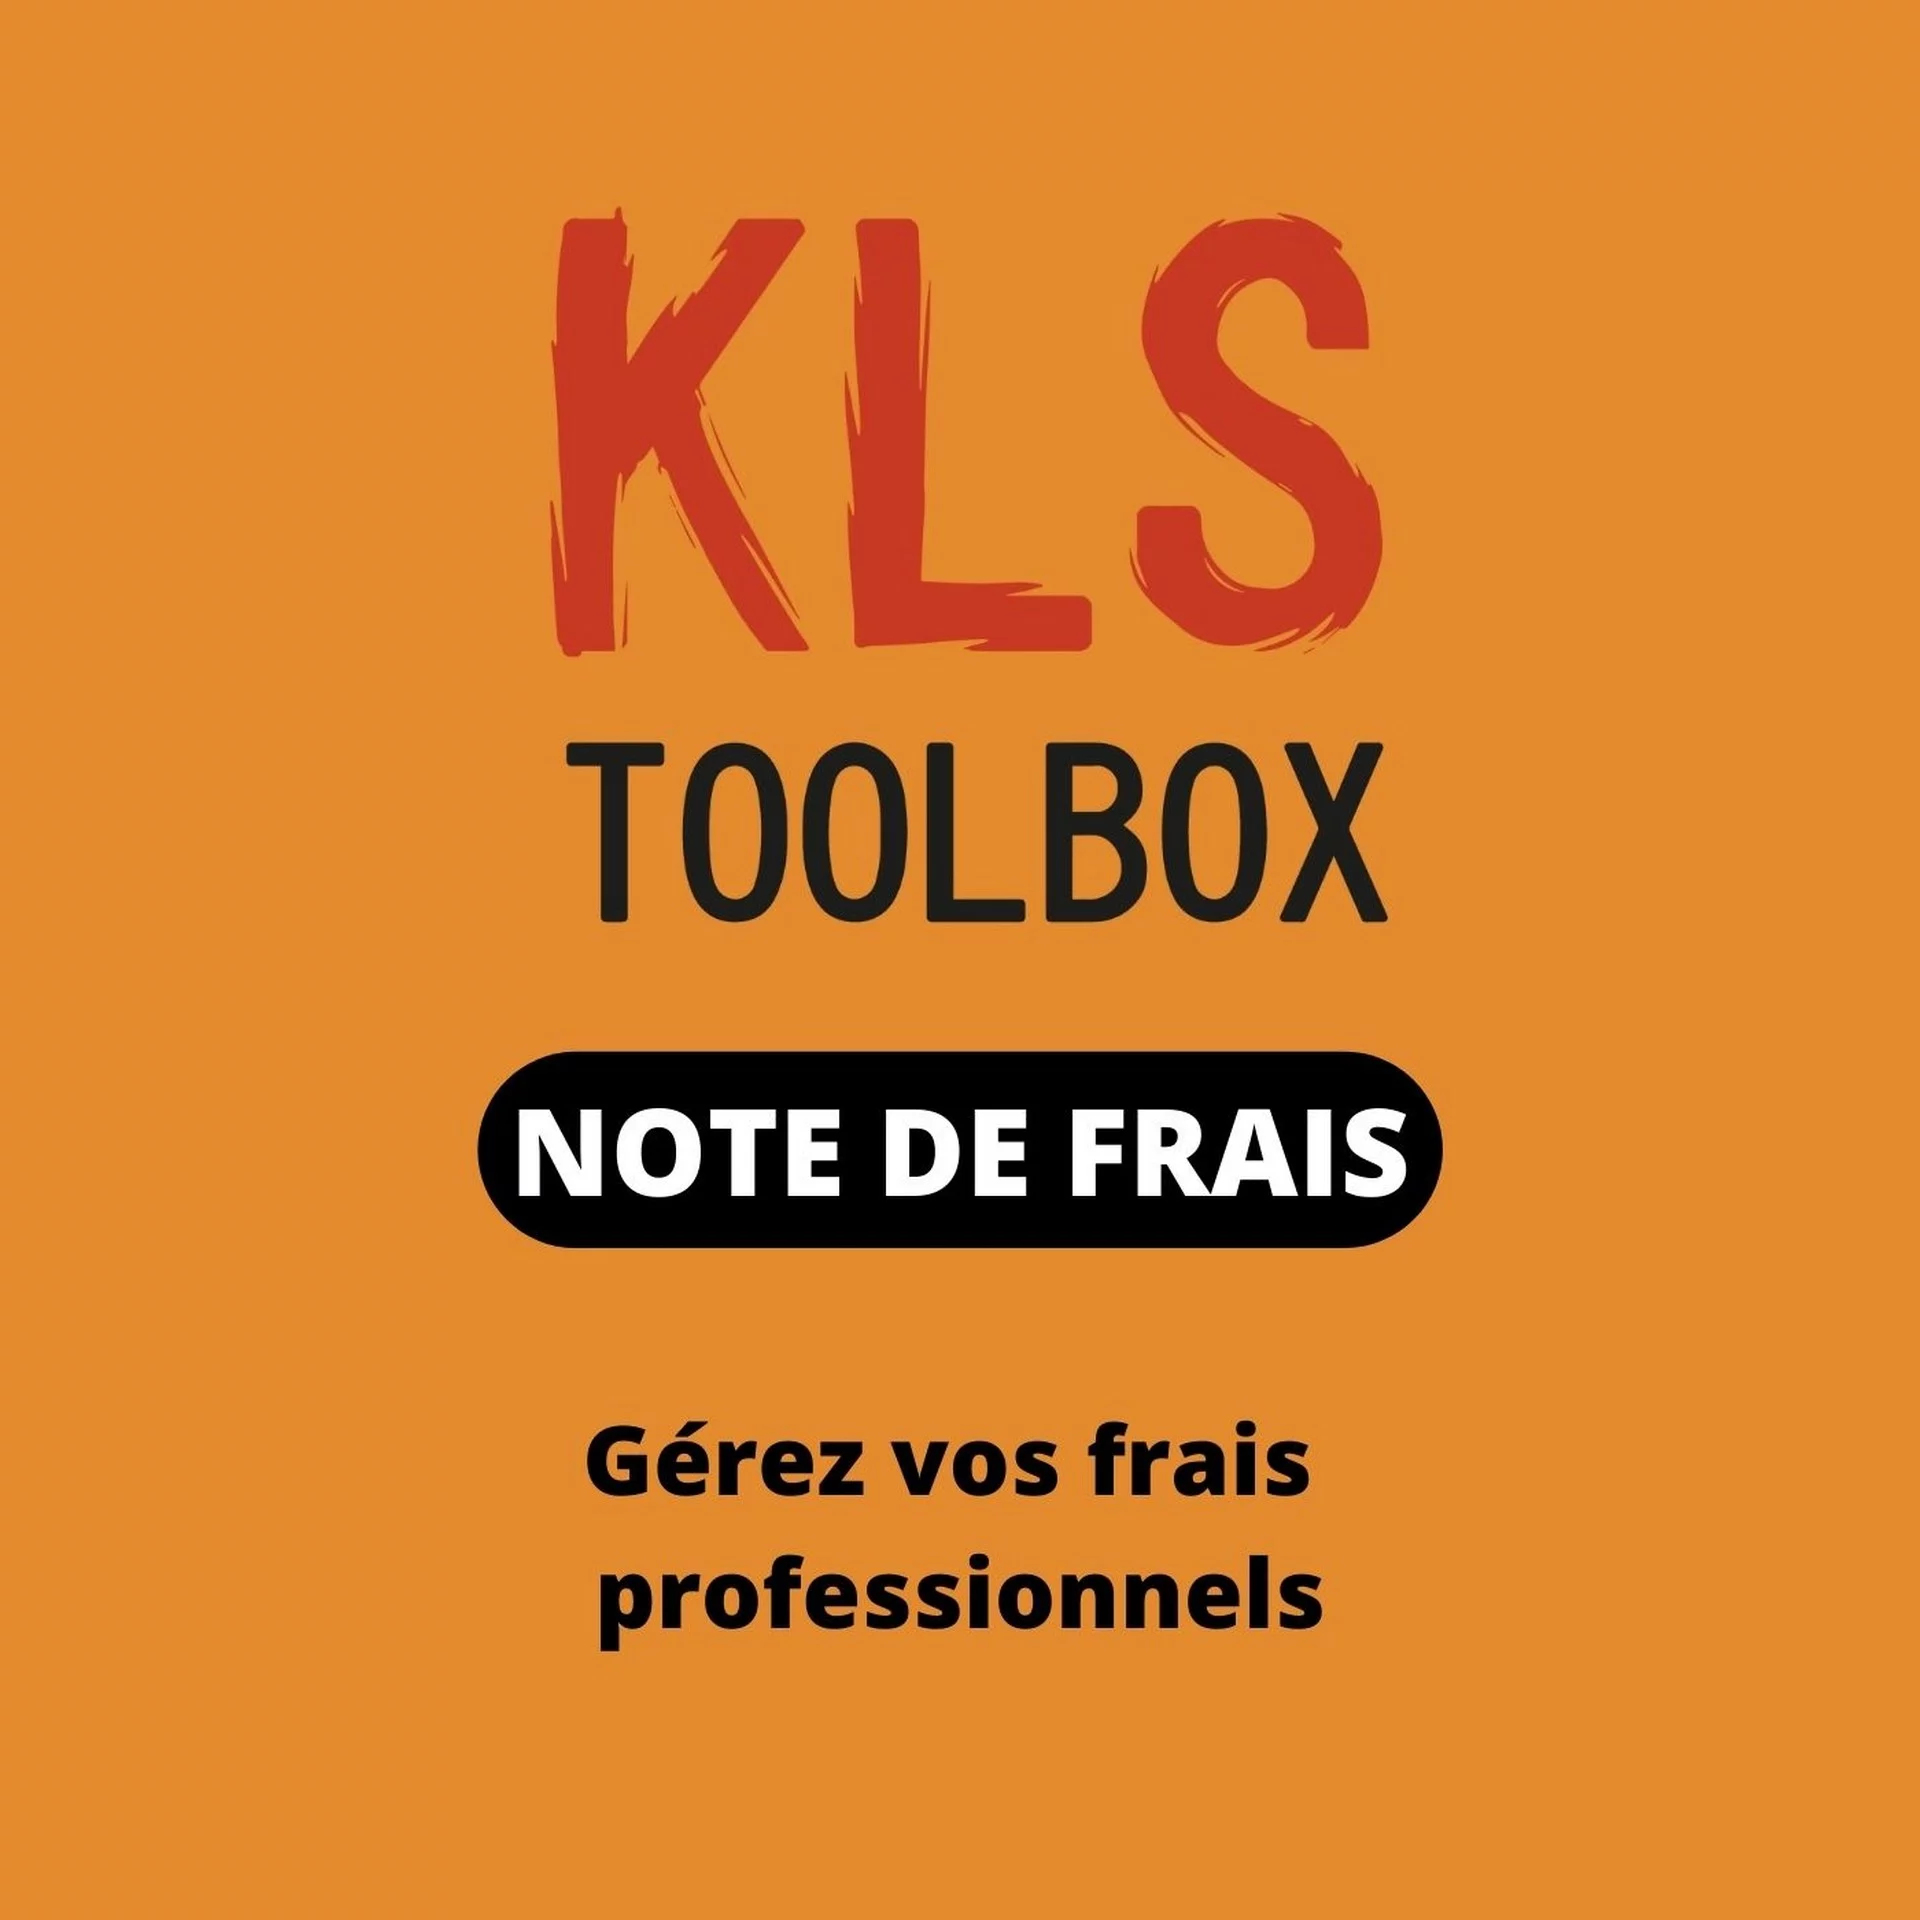 xtep kls toolbox note de frais